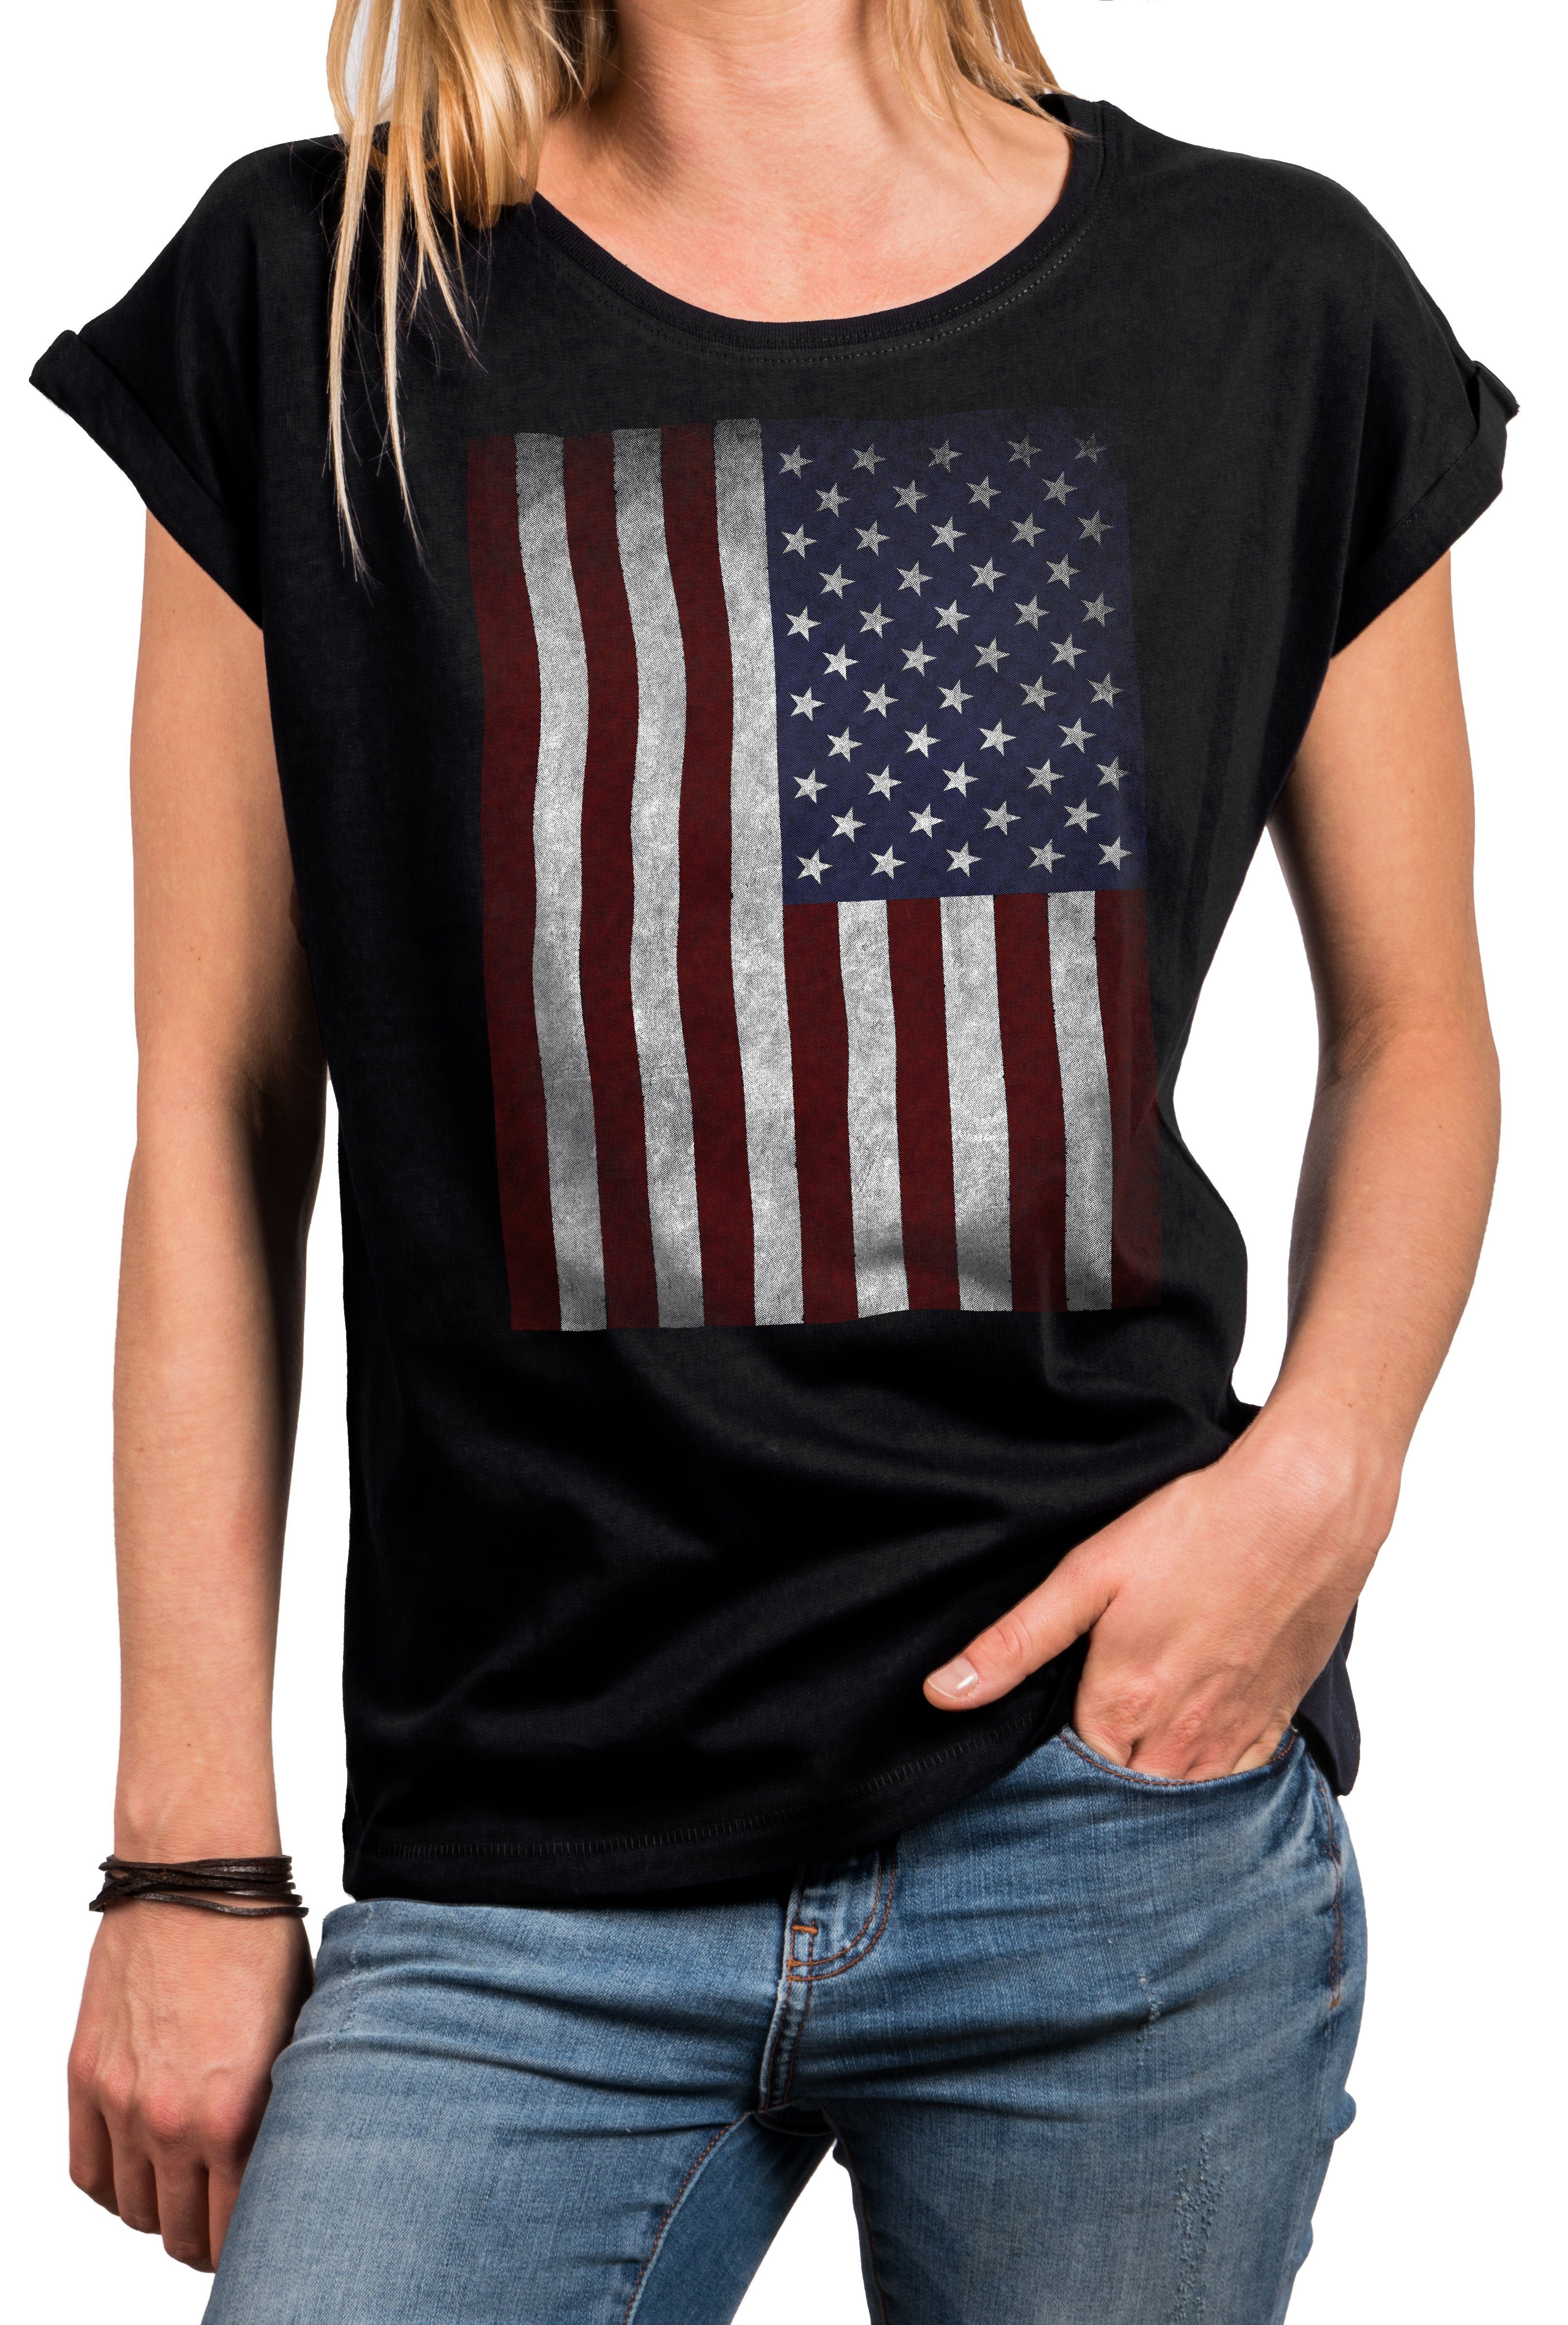 MAKAYA Print-Shirt Damen USA Flagge Tunika blau) große Baumwolle, Amerika Top Sommer Vintage (Kurzarm, Fahne grau, schwarz, Größen Oberteile